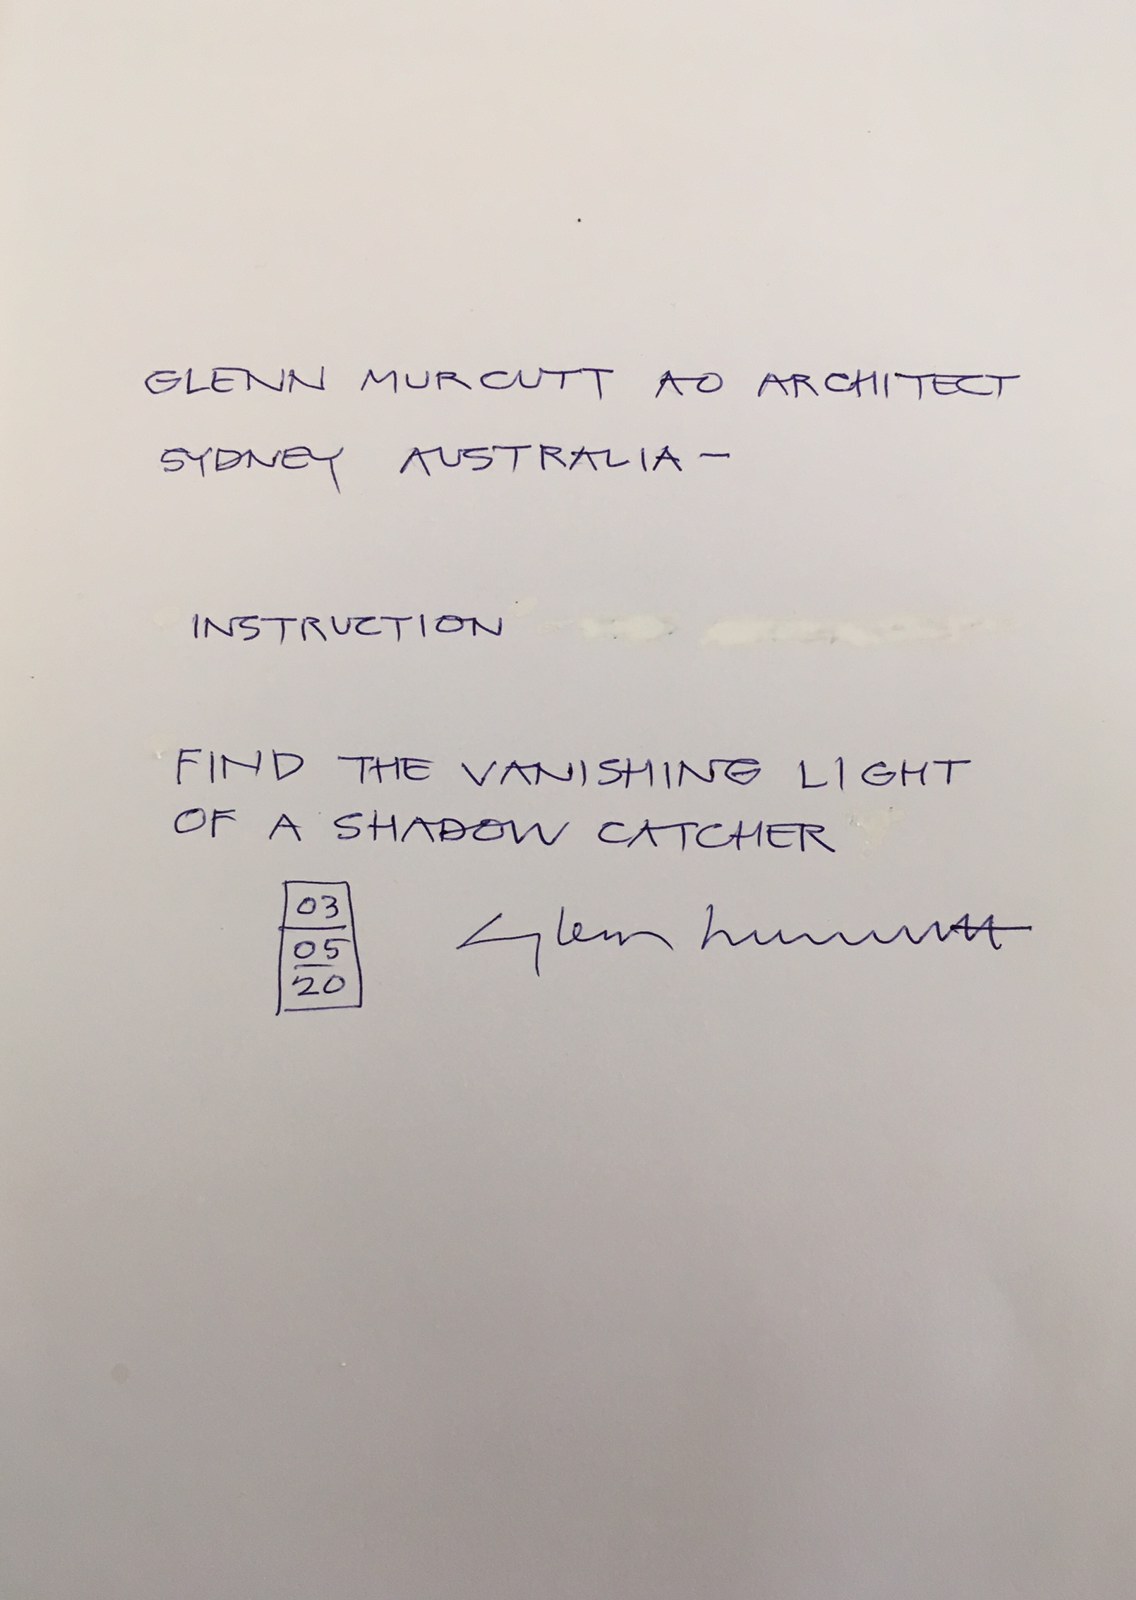 Photo of architect Glen Murcutt's instruction written on a piece of paper.